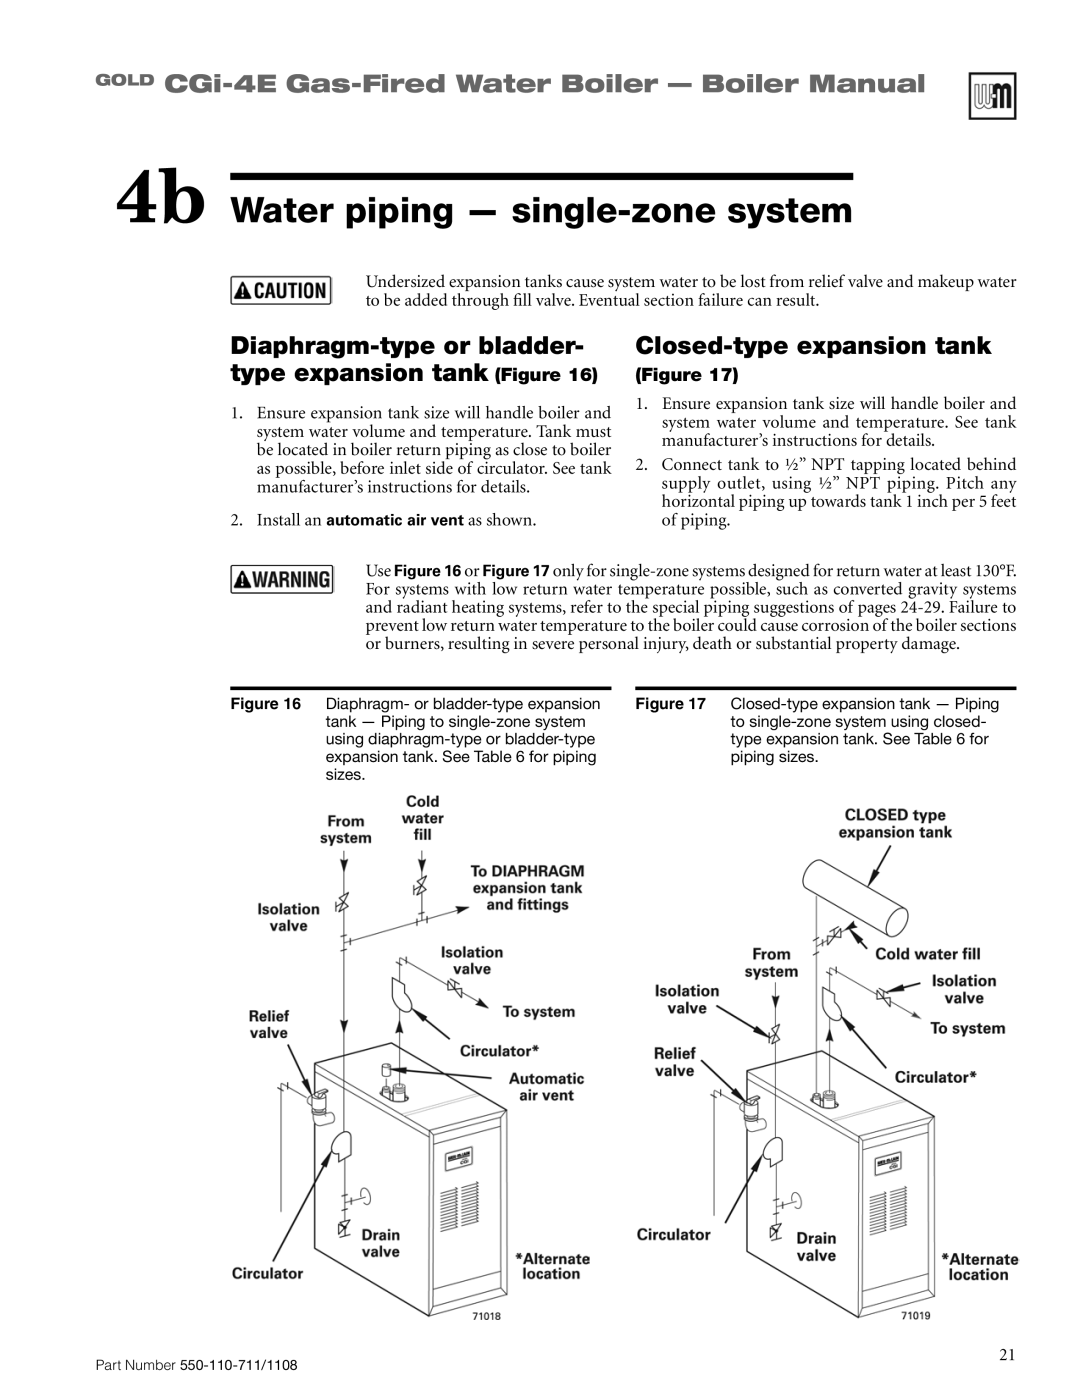 Weil-McLain CGI-4E manual 4b Water piping - single-zonesystem, GOLD CGi-4E Gas-FiredWater Boiler - Boiler Manual 